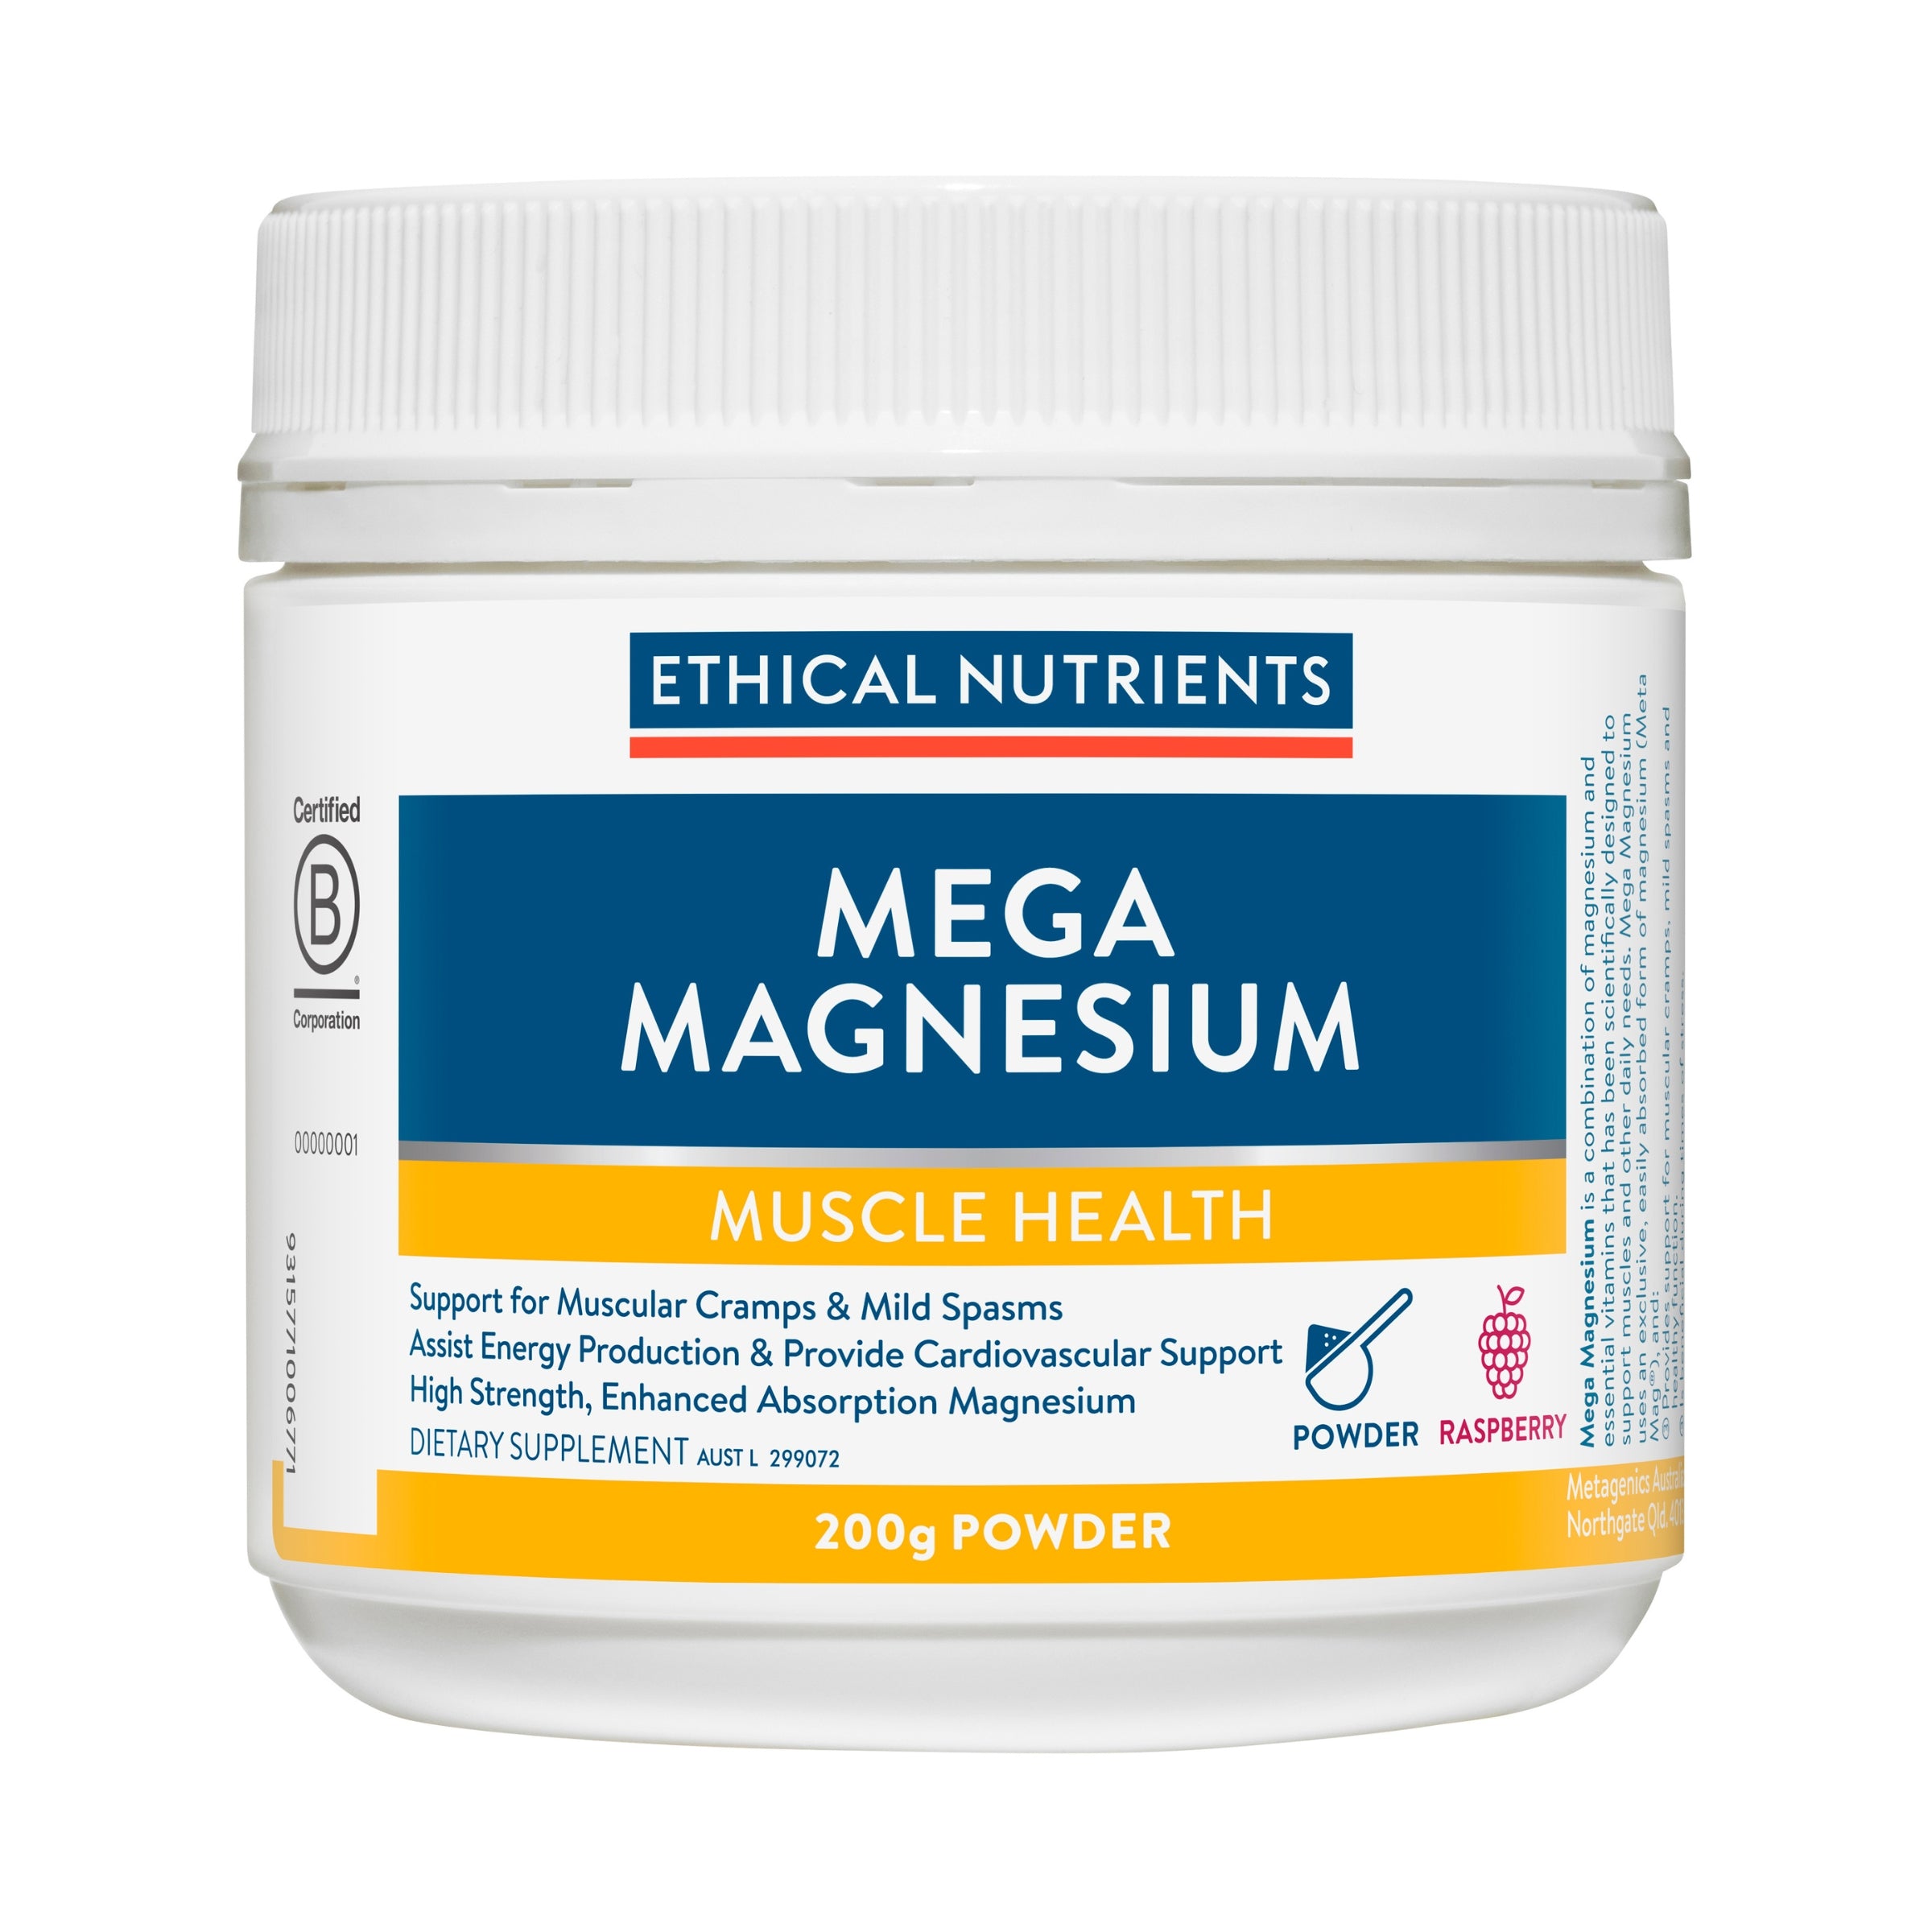 Ethical Nutrients Mega Magnesium Powder Raspberry 200g #size & flavour_raspberry 200g